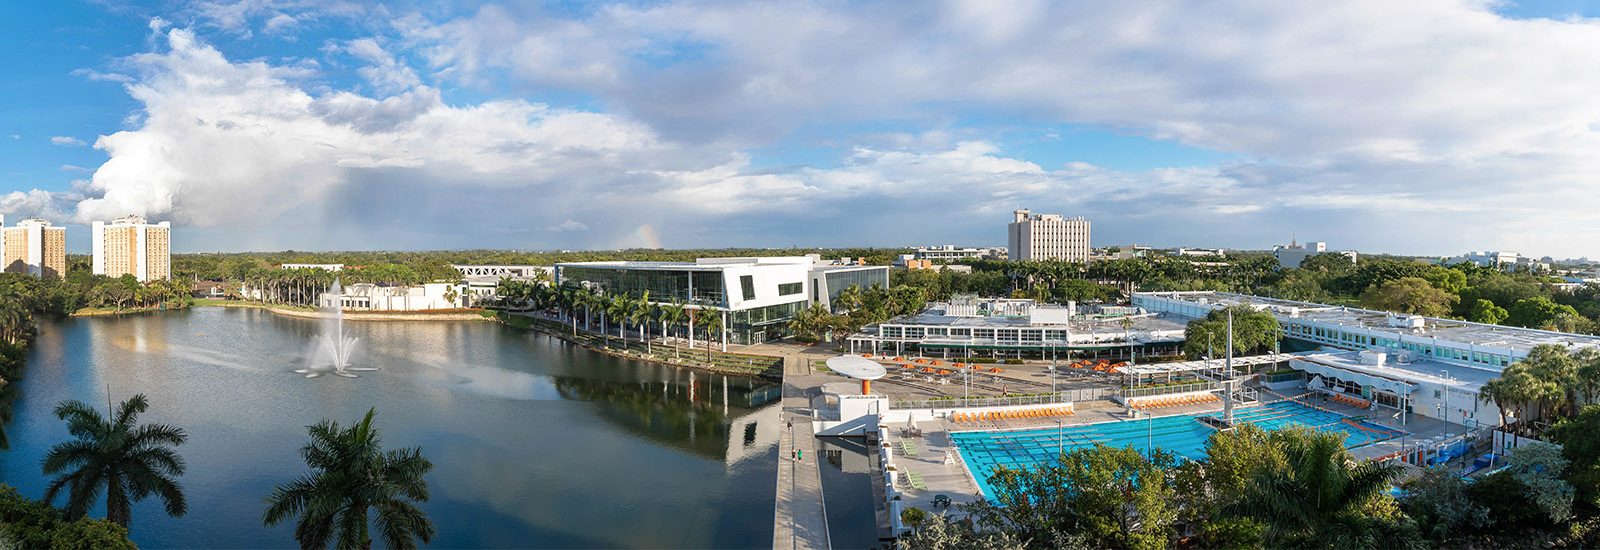 Sprawling vista of the University of Miami